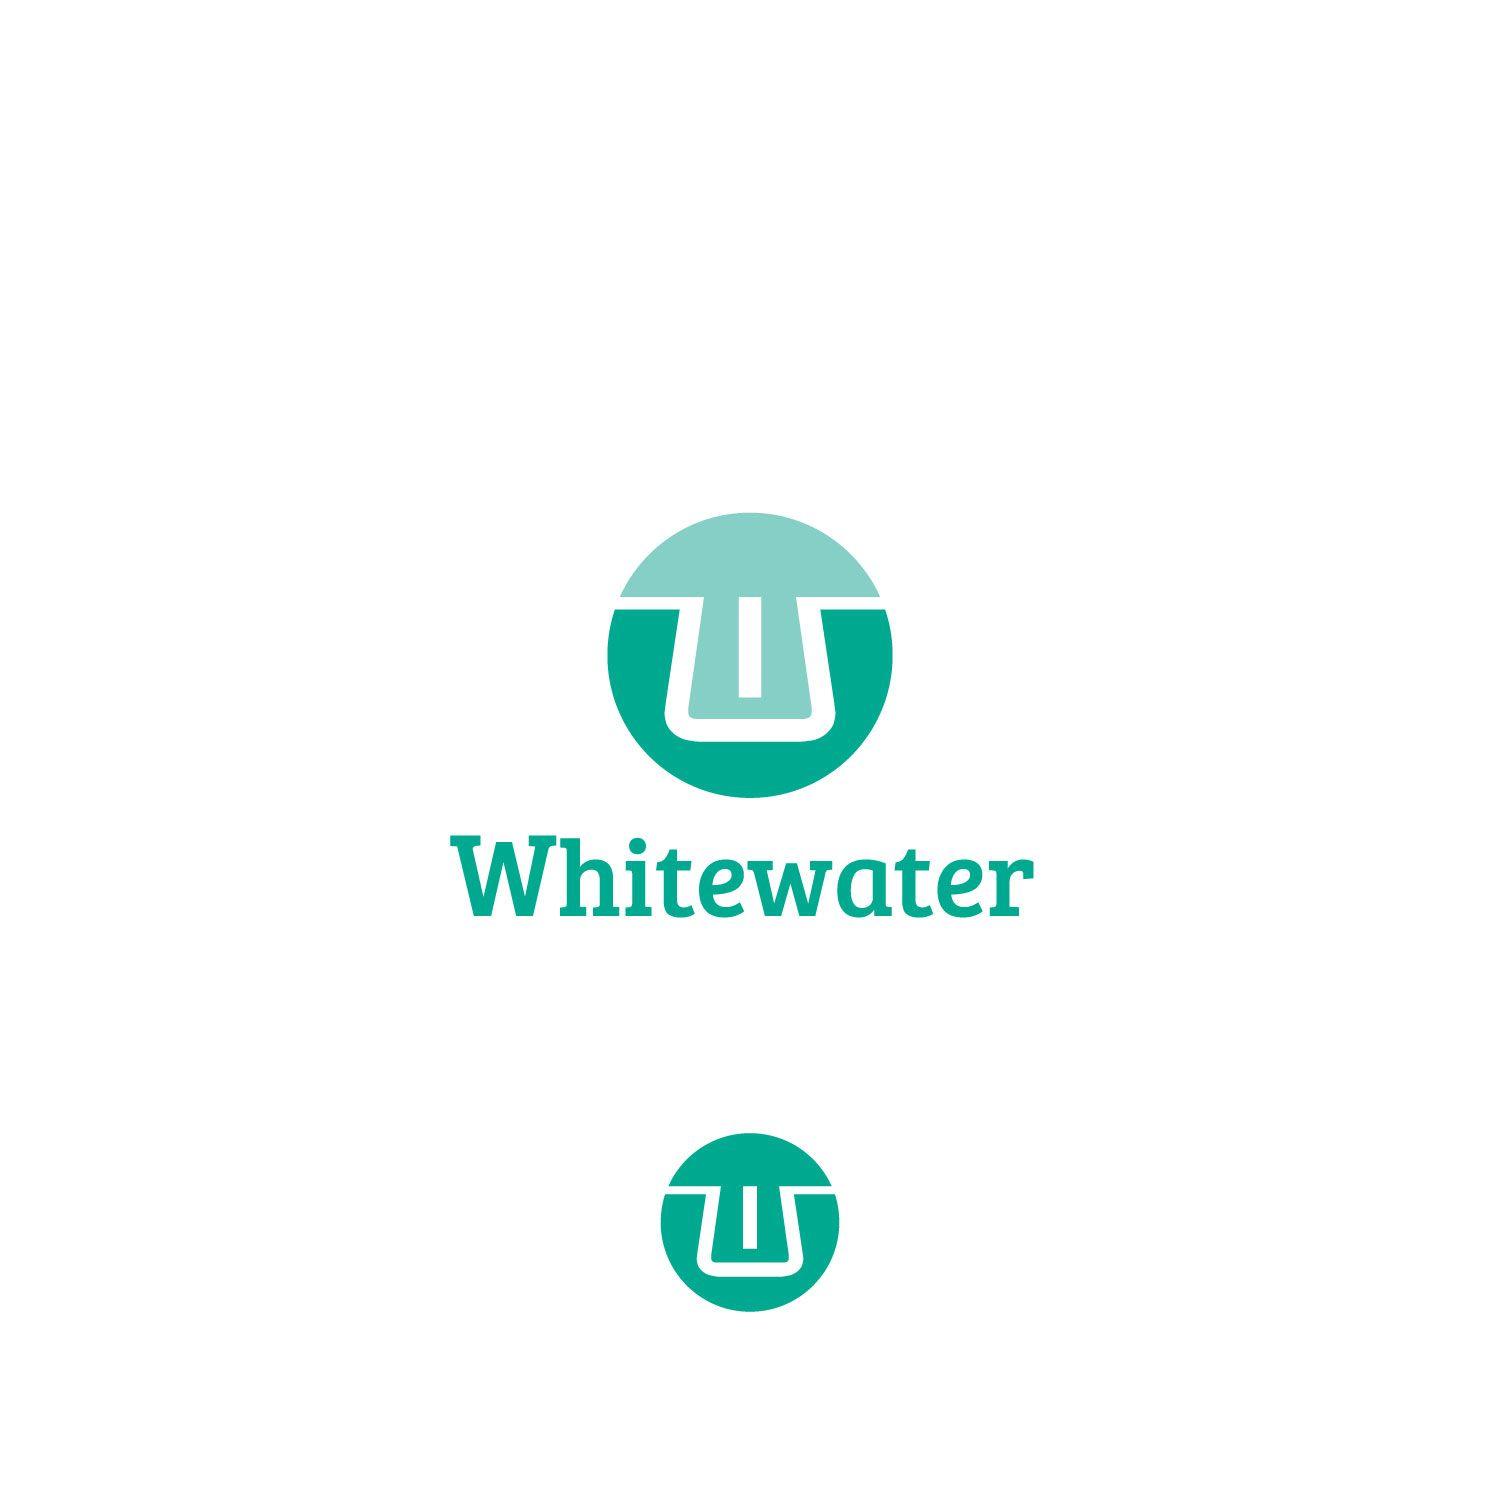 Whitewater Company Logo - Upmarket, Playful, Business Logo Design for 